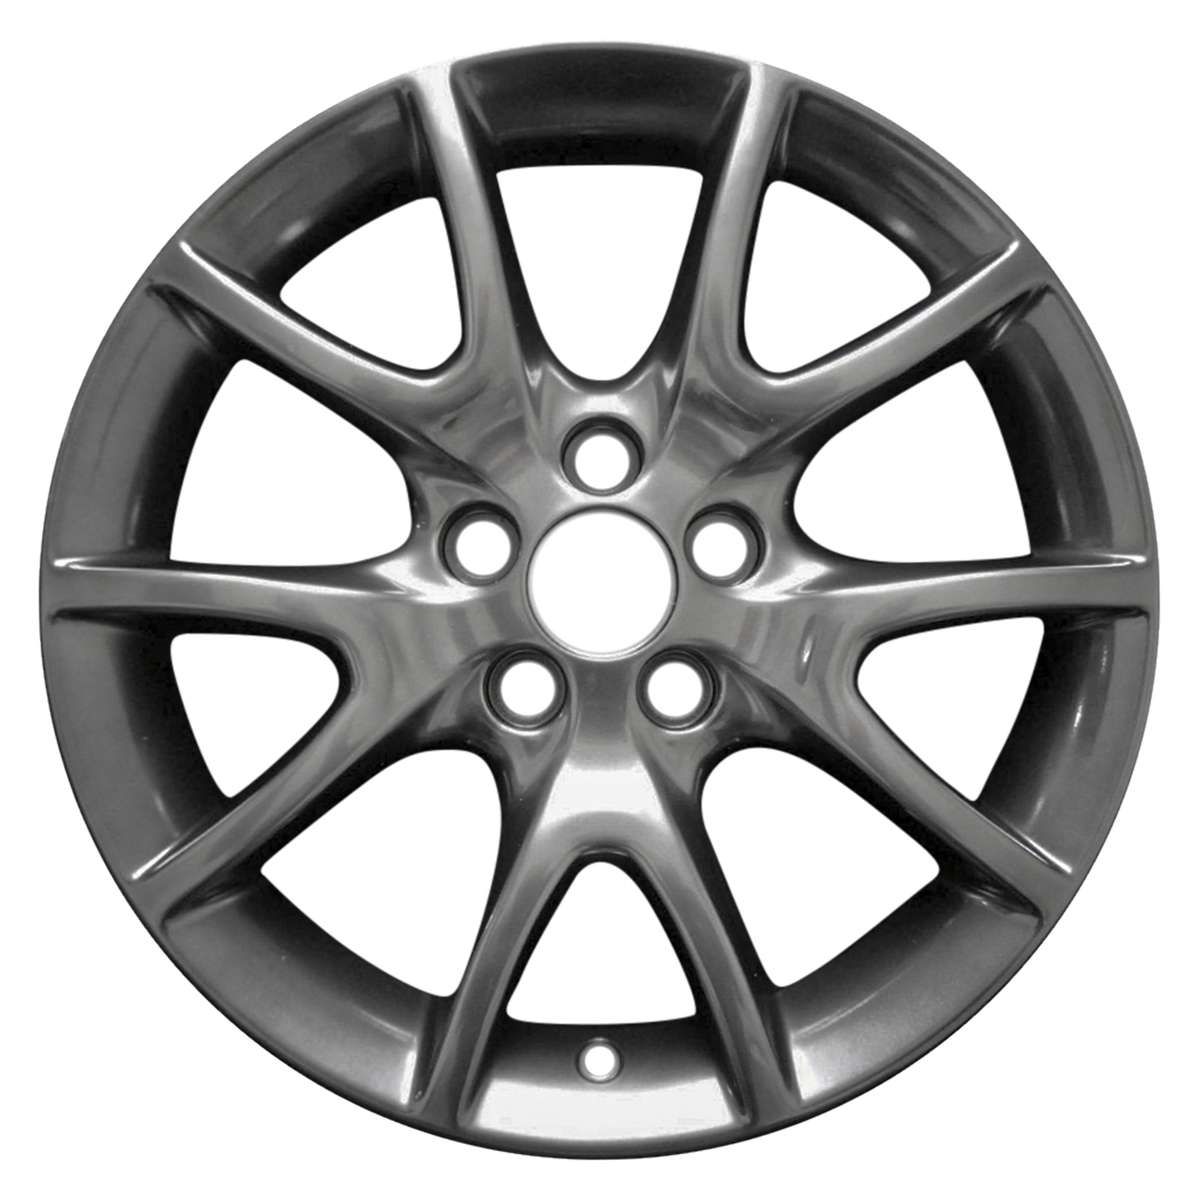 2015 Dodge Dart New 17" Replacement Wheel Rim RW2445H